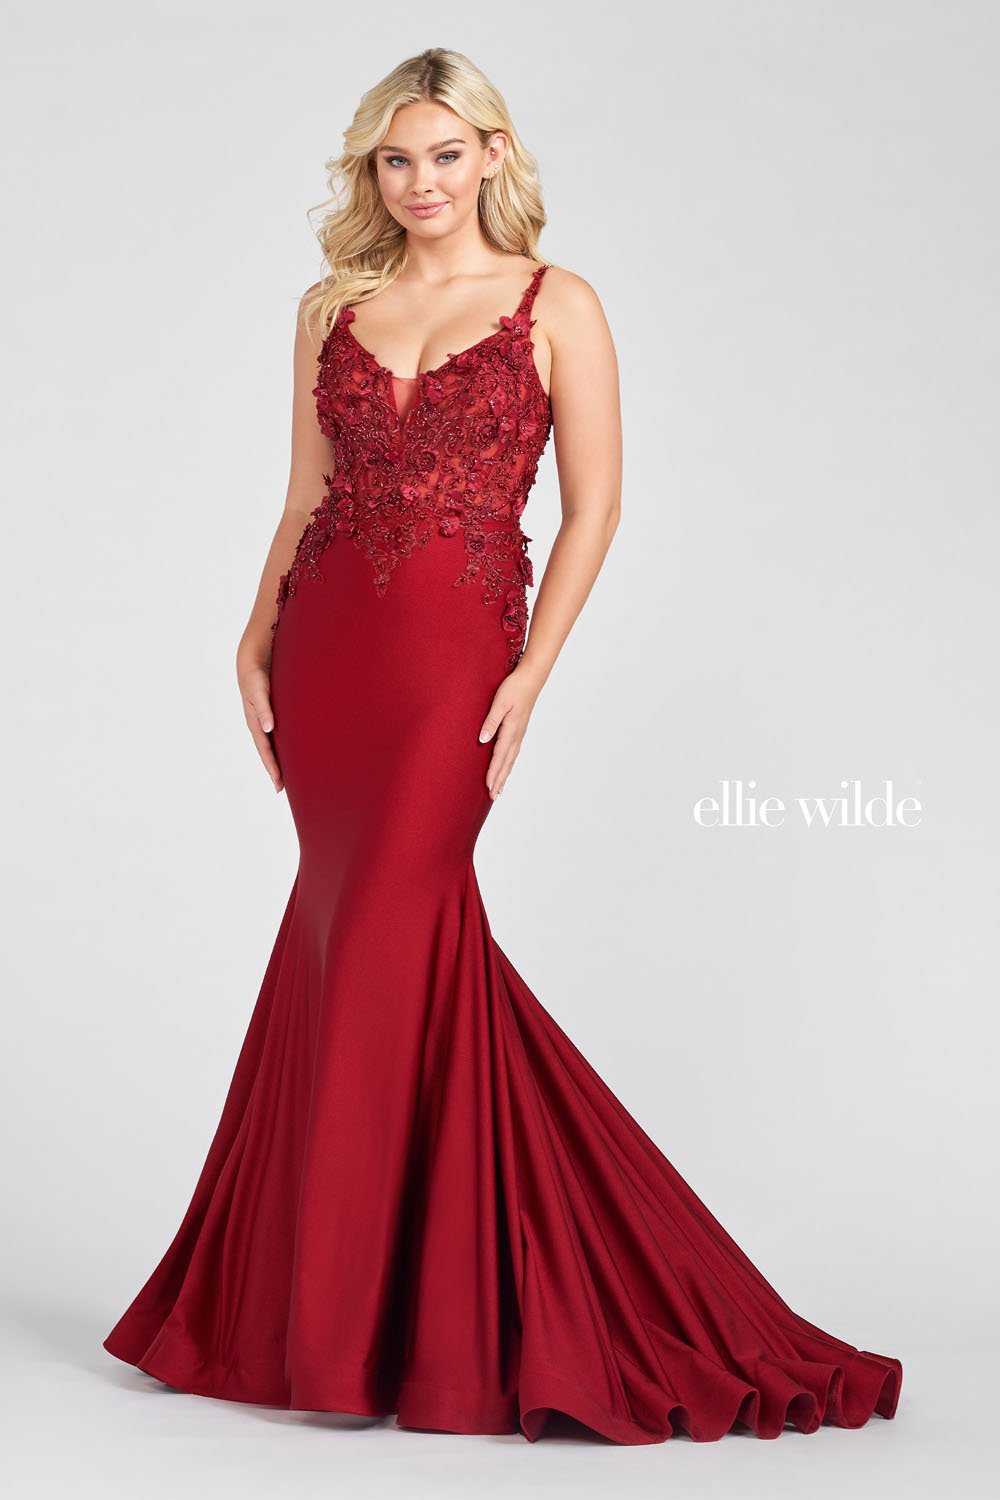 Ellie Wilde Wine EW122041 Prom Dress Image.  Wine formal dress.